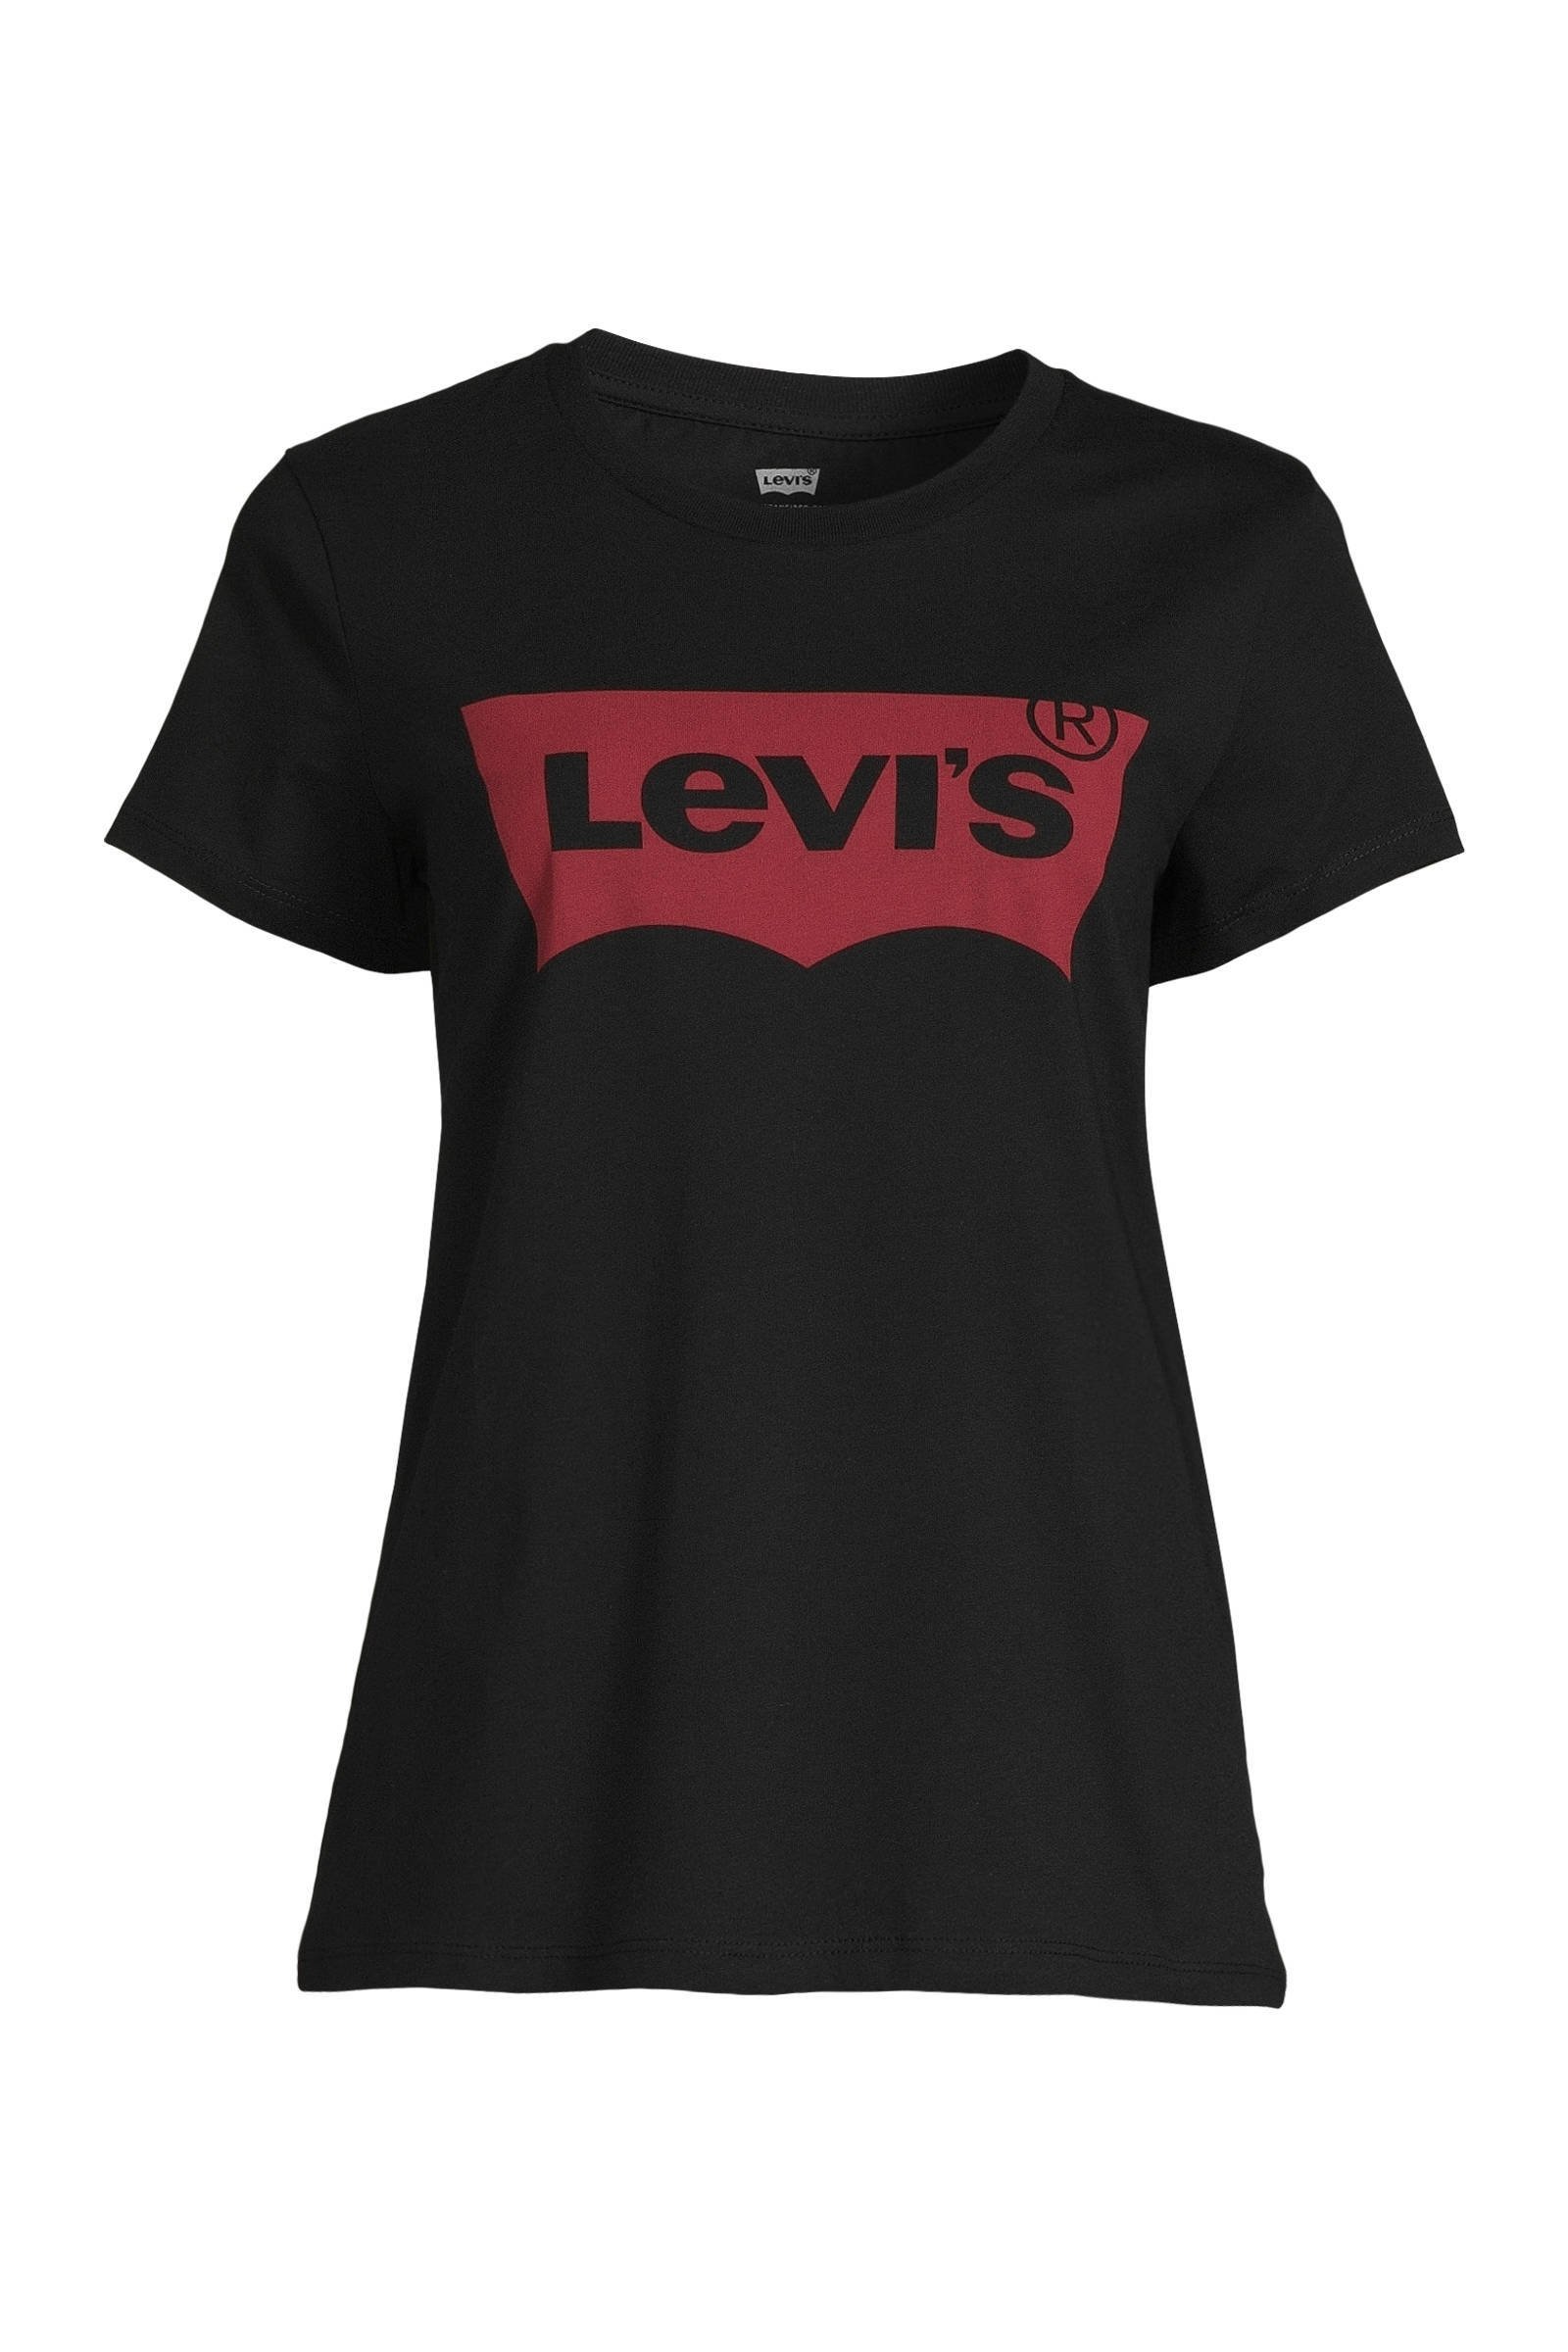 levis full t shirt